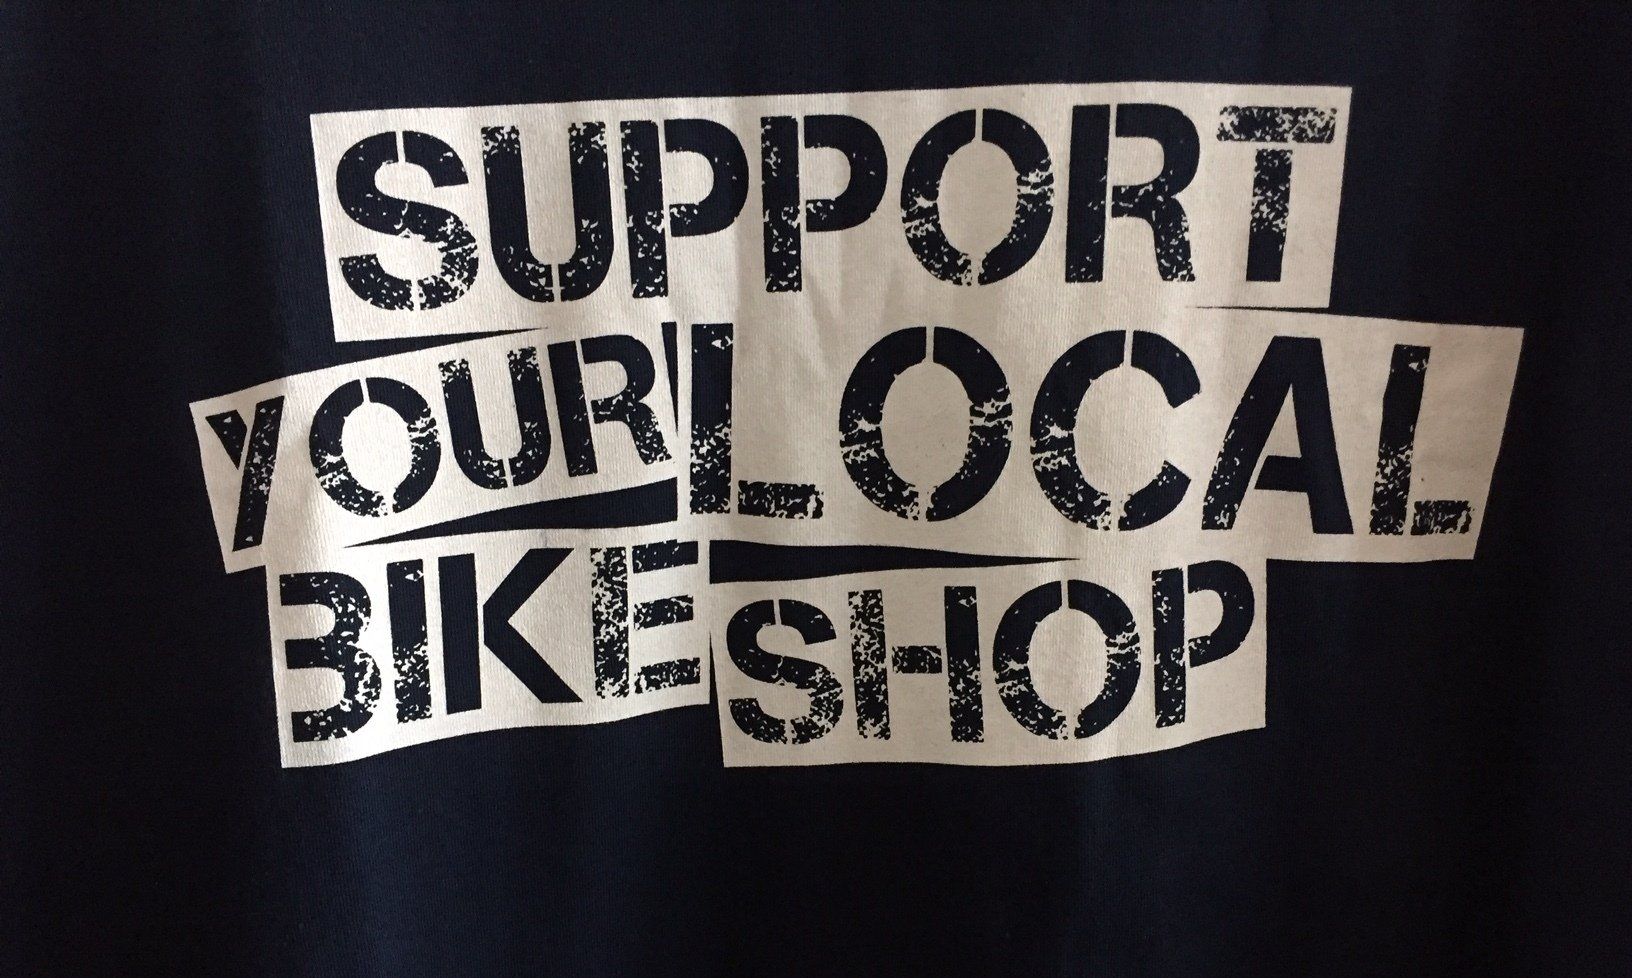 About Lancaster Bicycle Shop